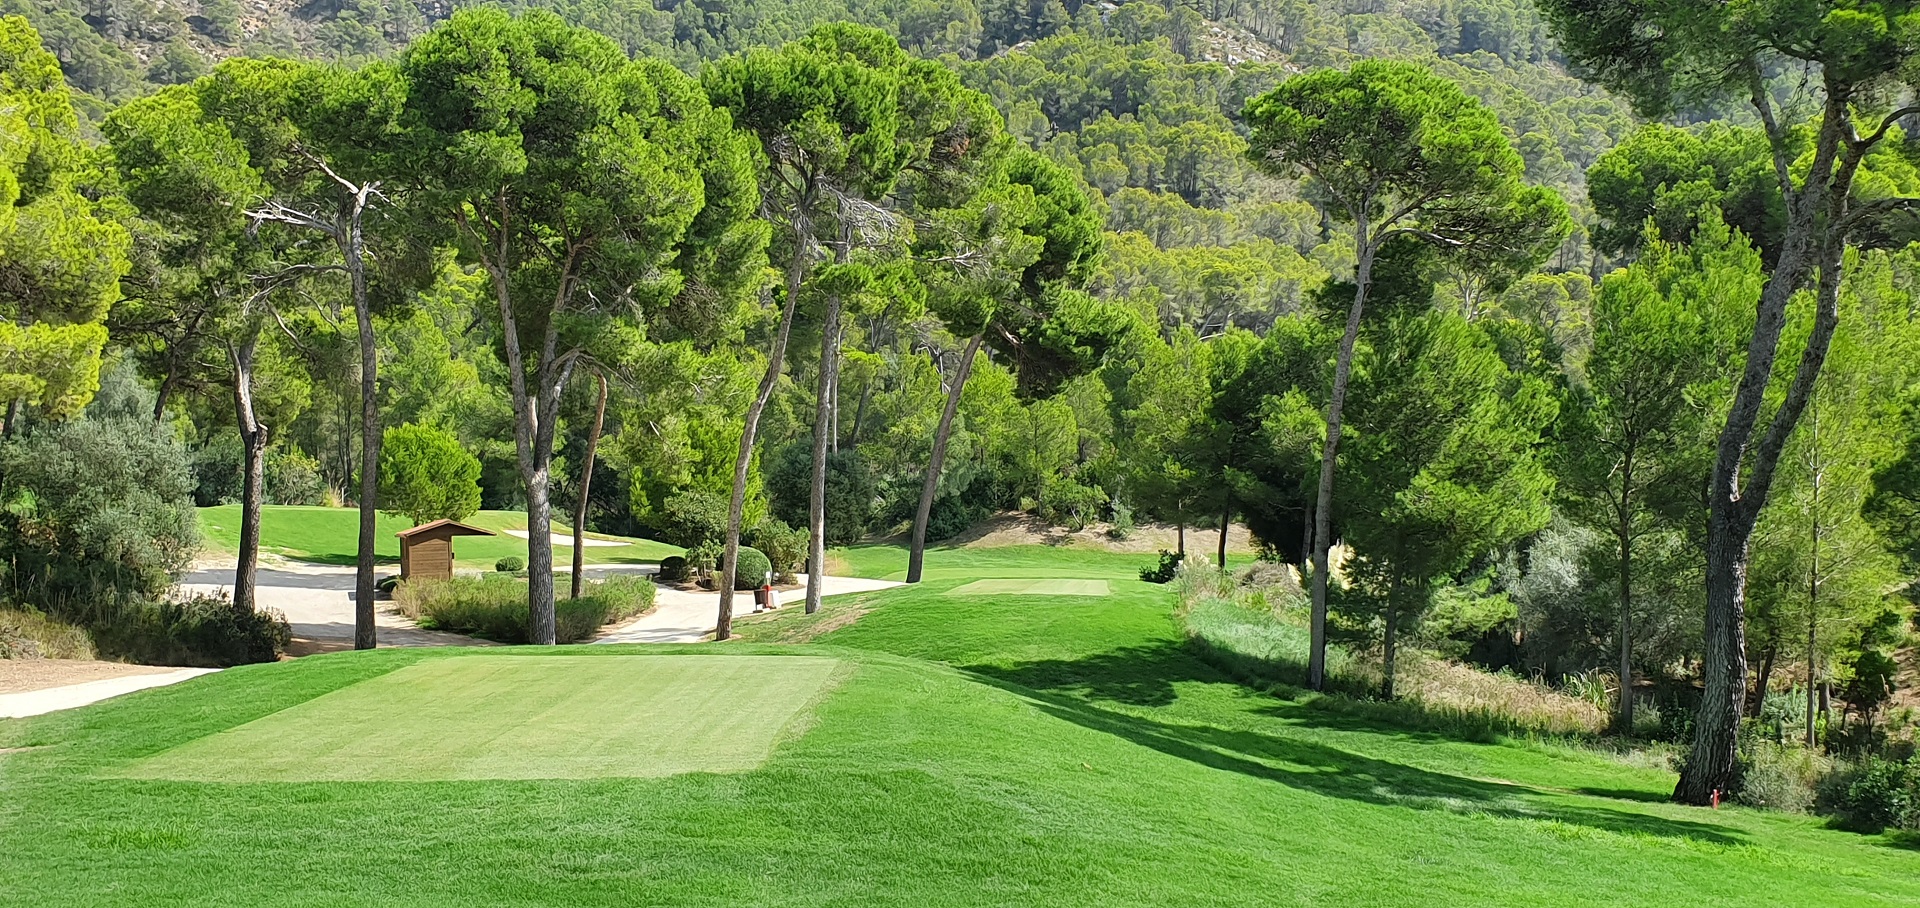 Club de Golf de Son Servera | Golf på Mallorca